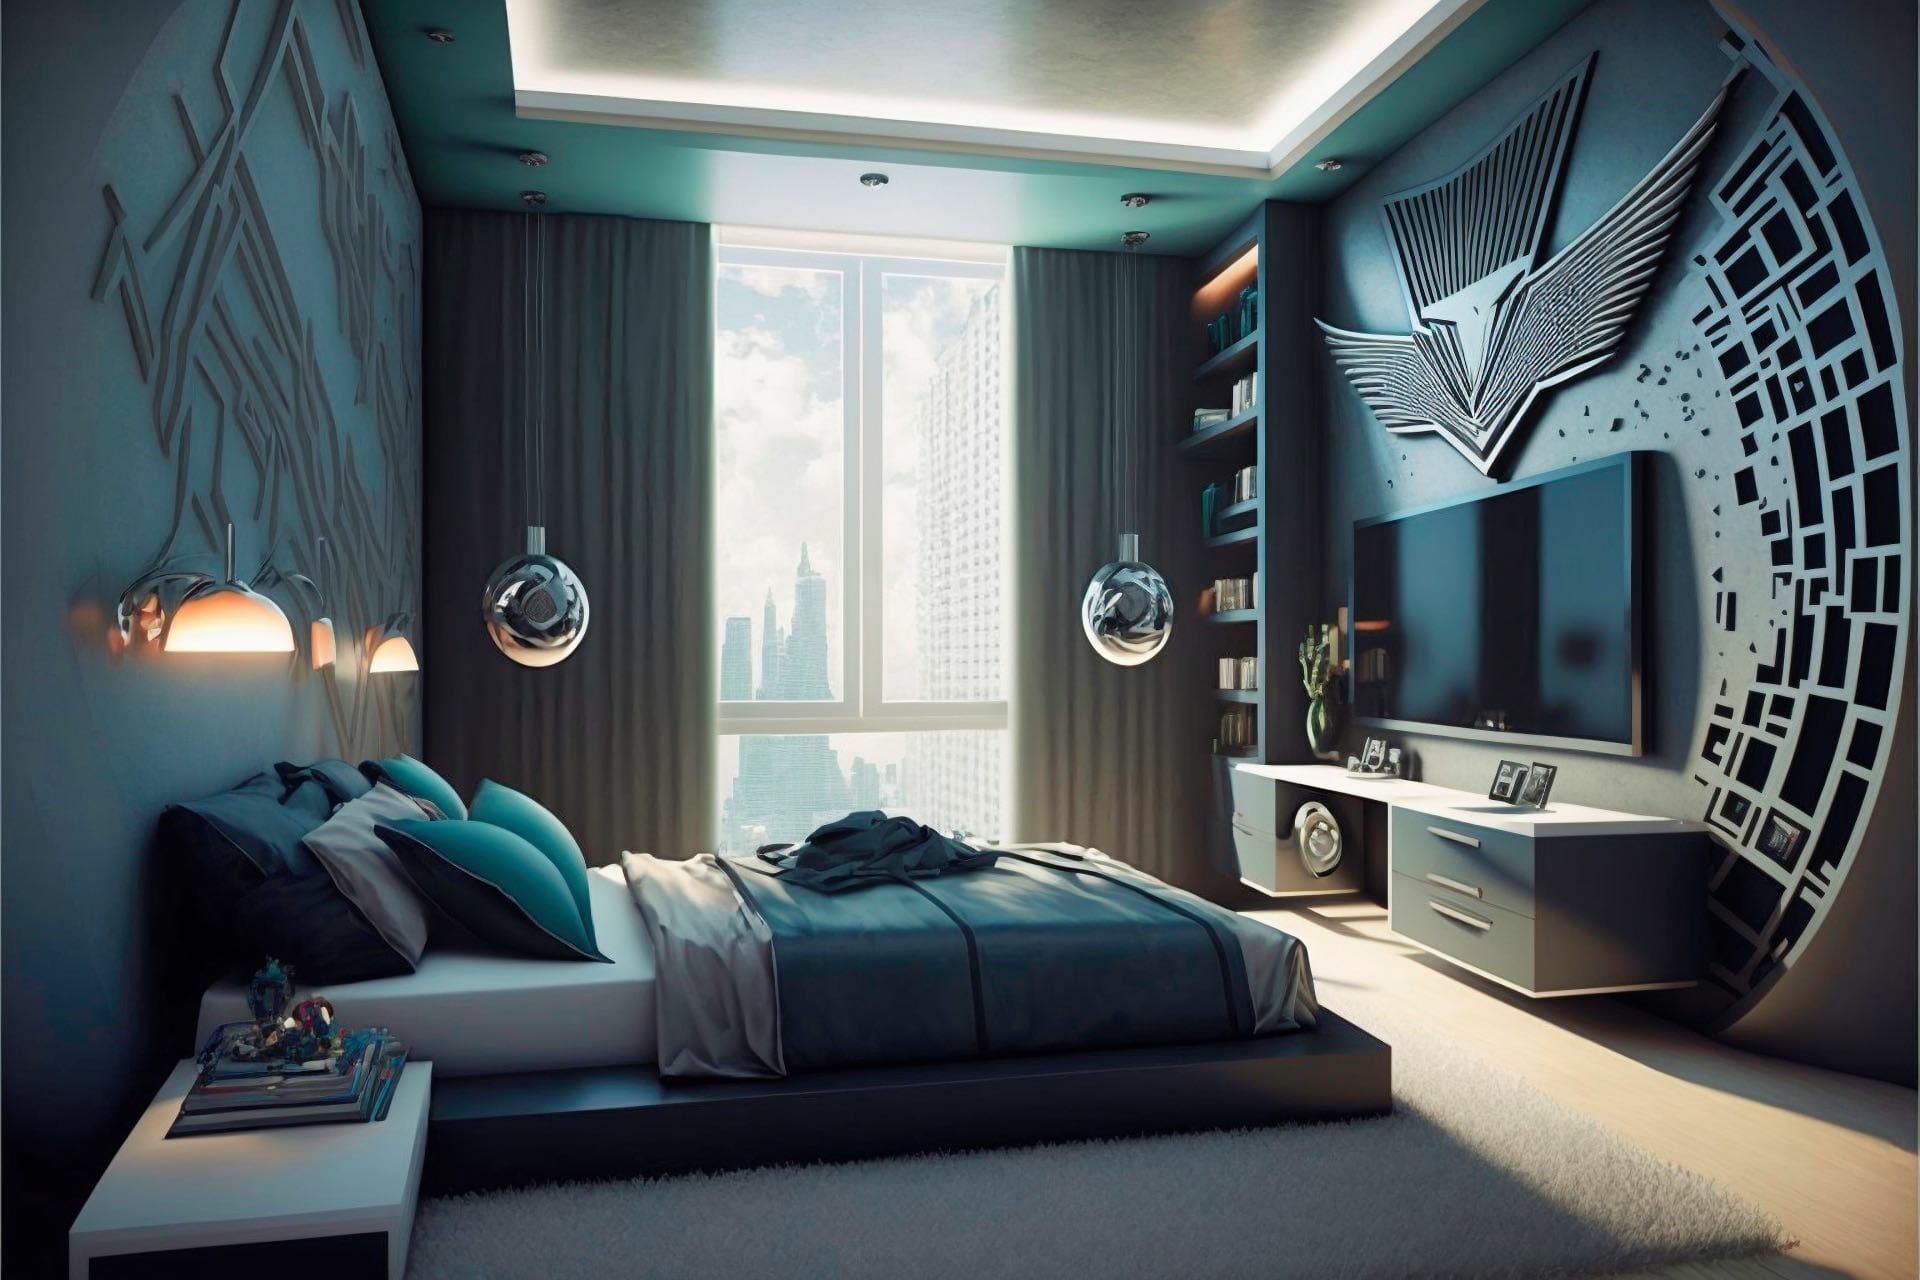 Sleek Modern Bedroom With Futuristic Style Upscale